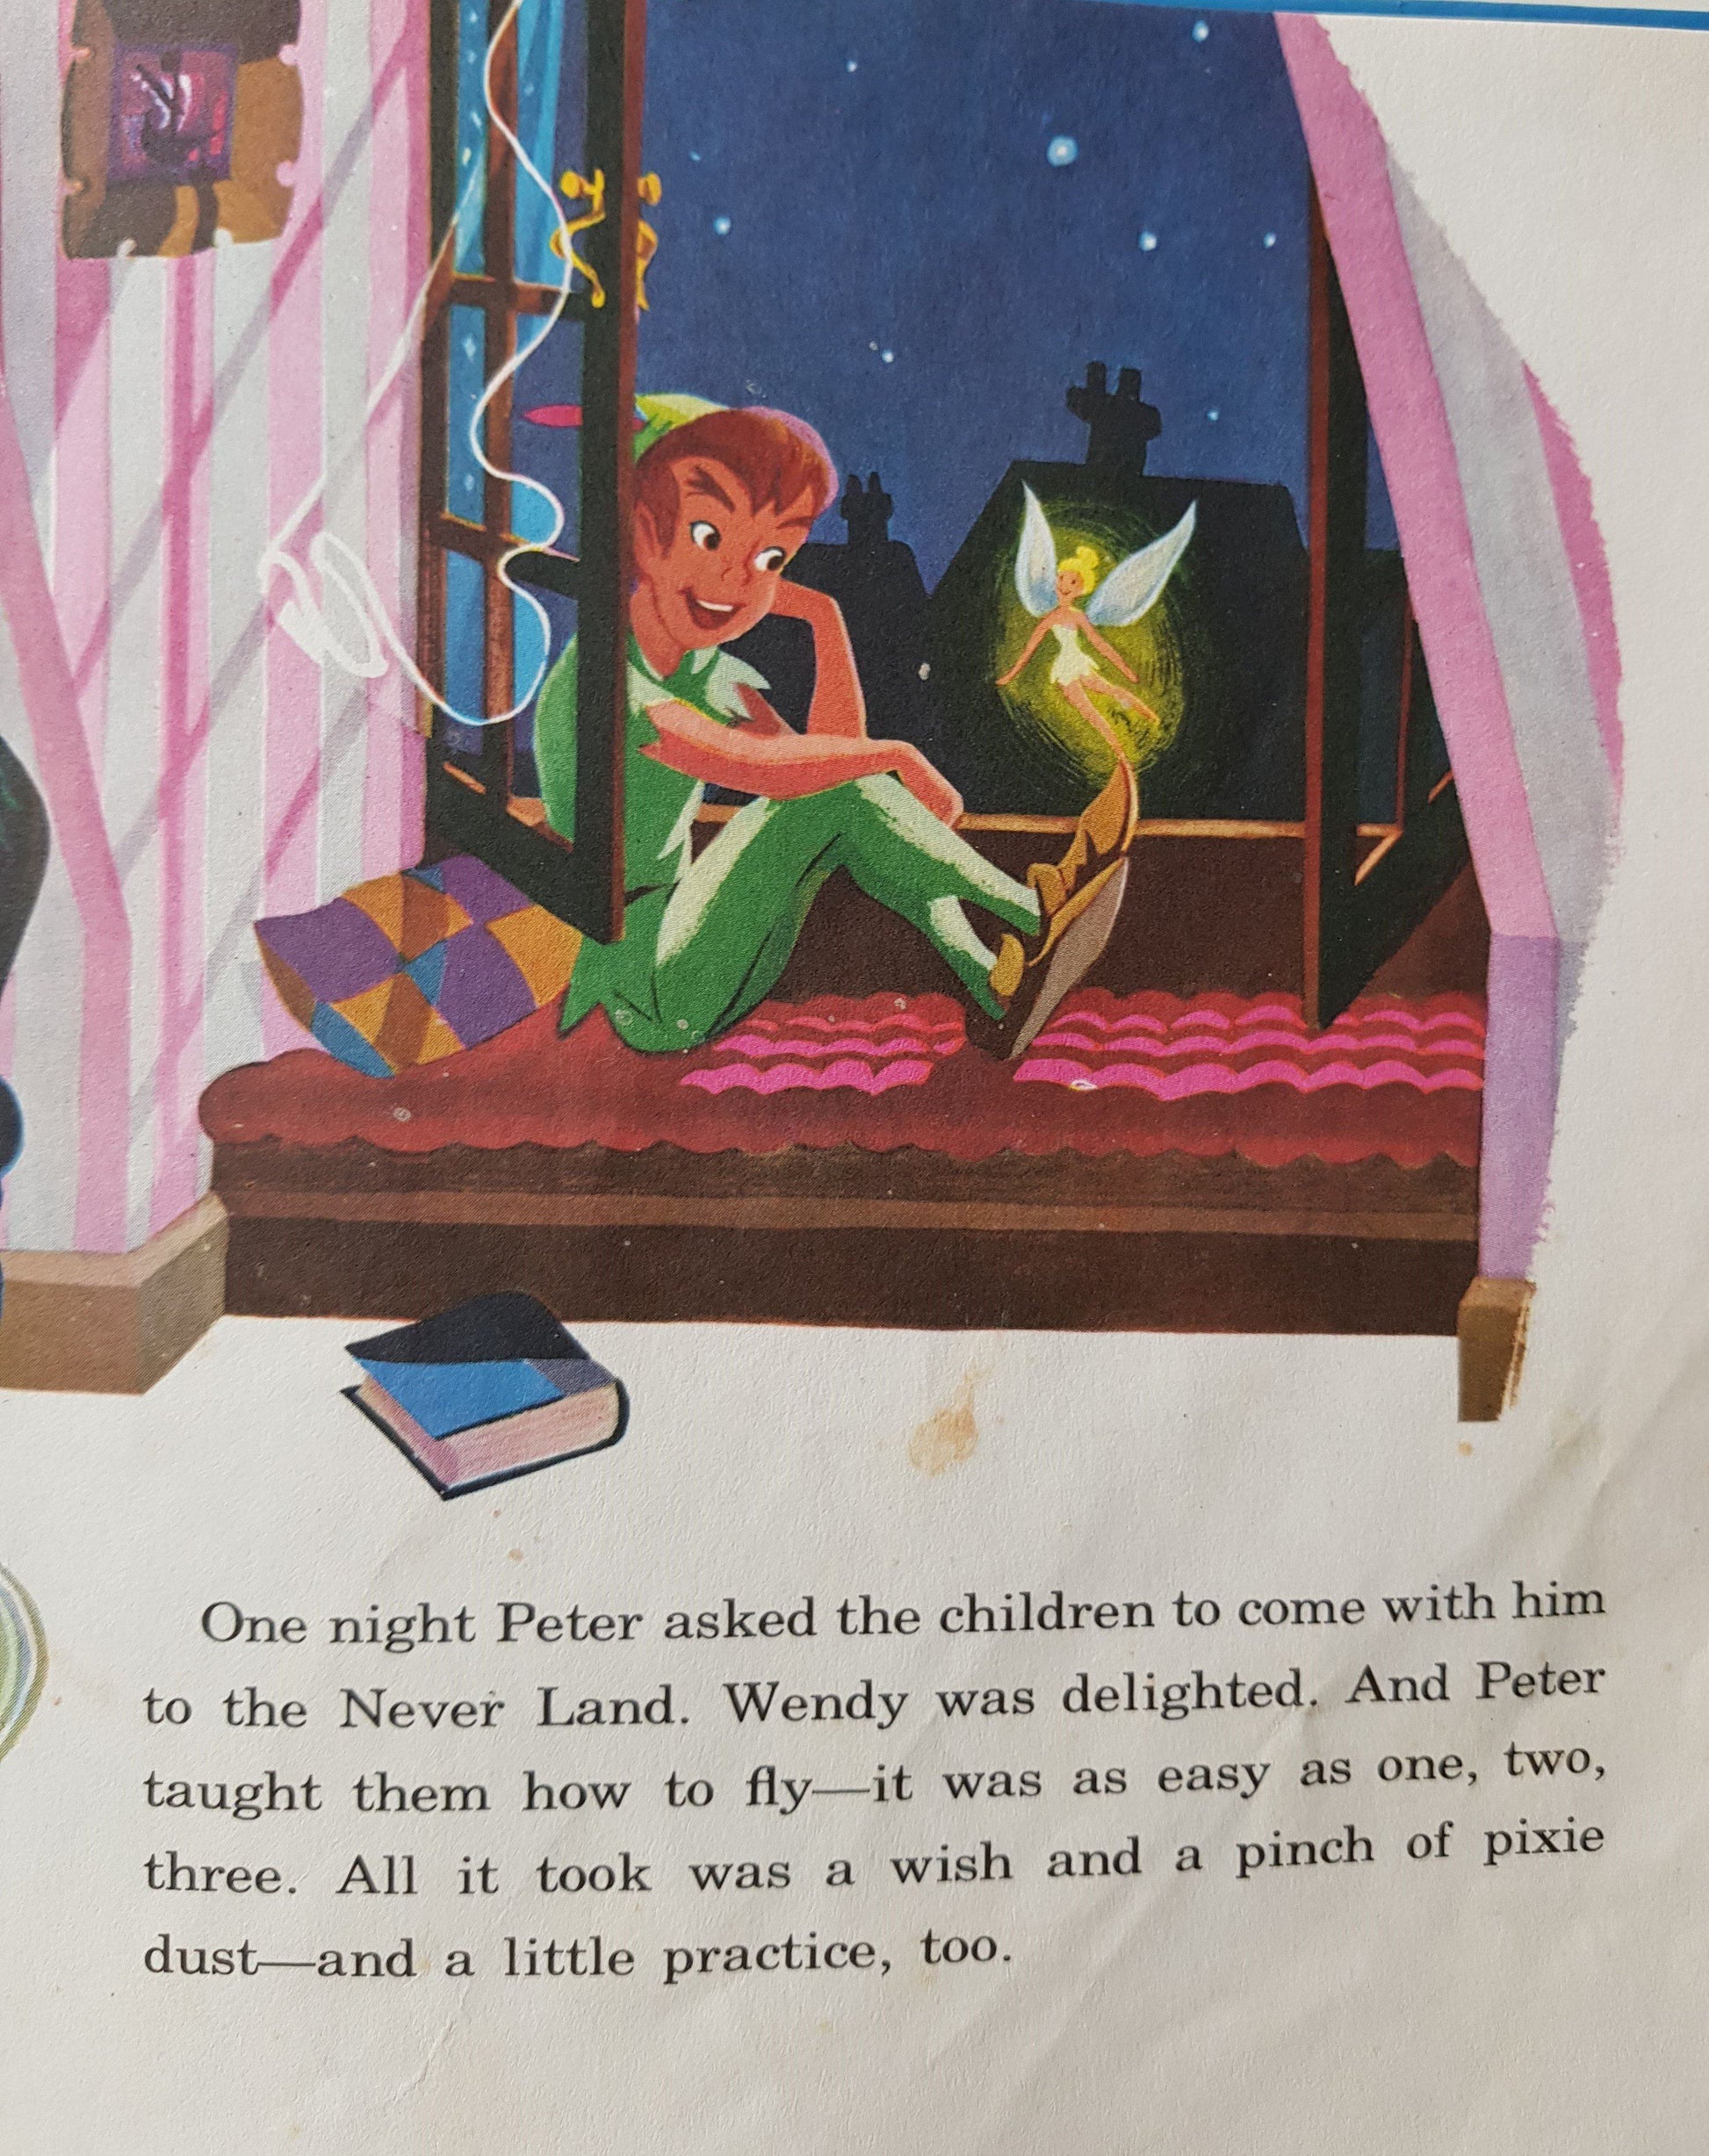 Peter Pan Very Good, +4 Yrs Disney  (6299158020281)